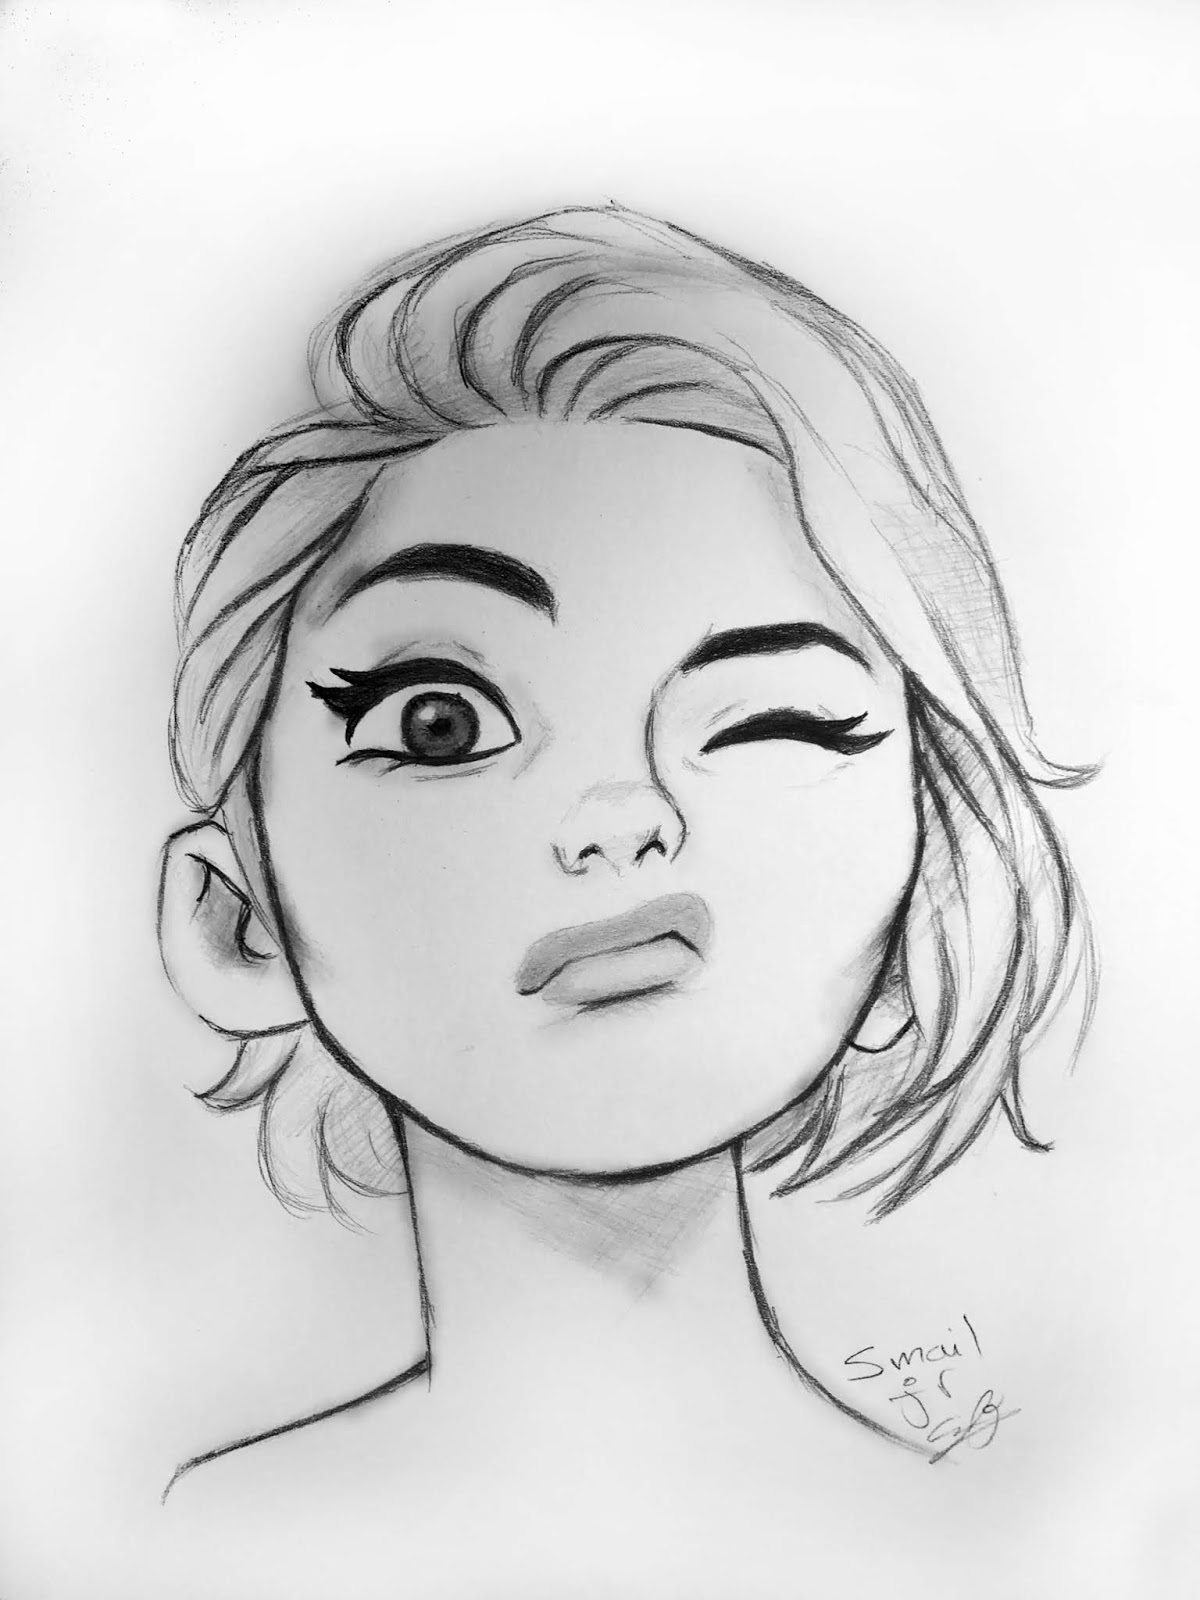 Cartoon face pencil drawing - Smail Jr